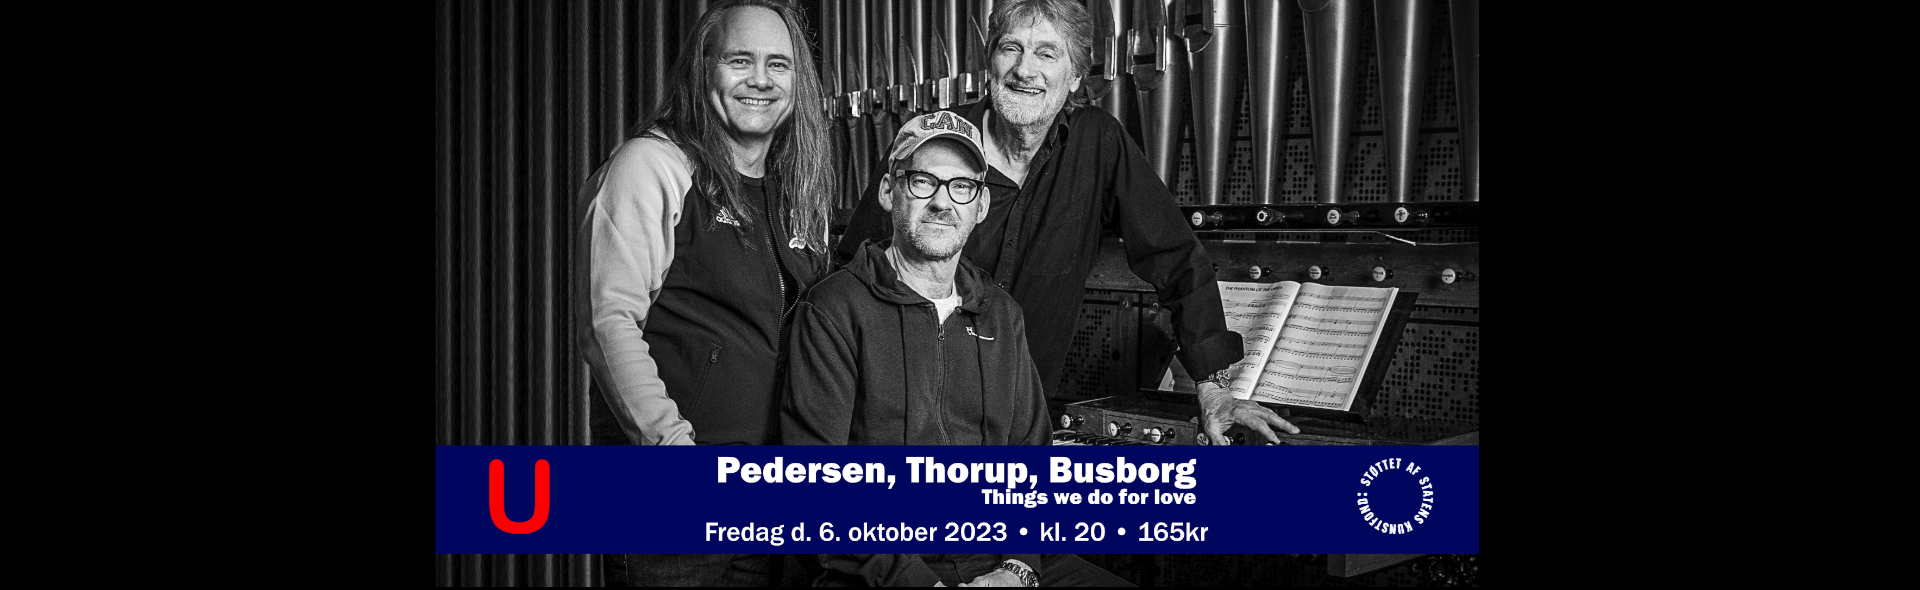 Pedersen, Thorup, Busborg_slide_poster